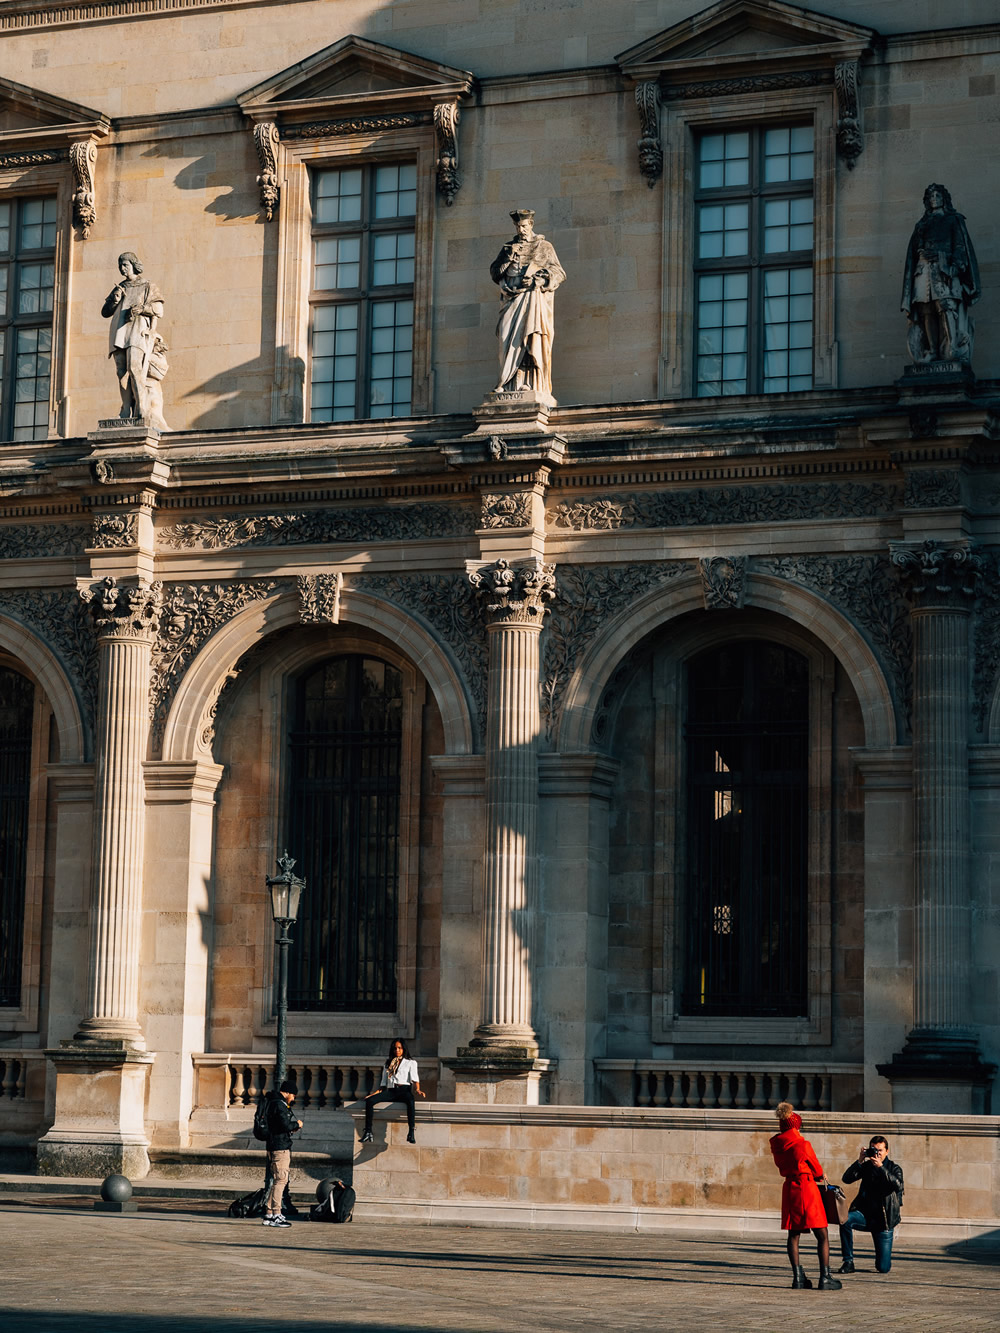 Visit the Louvre museum in Paris France